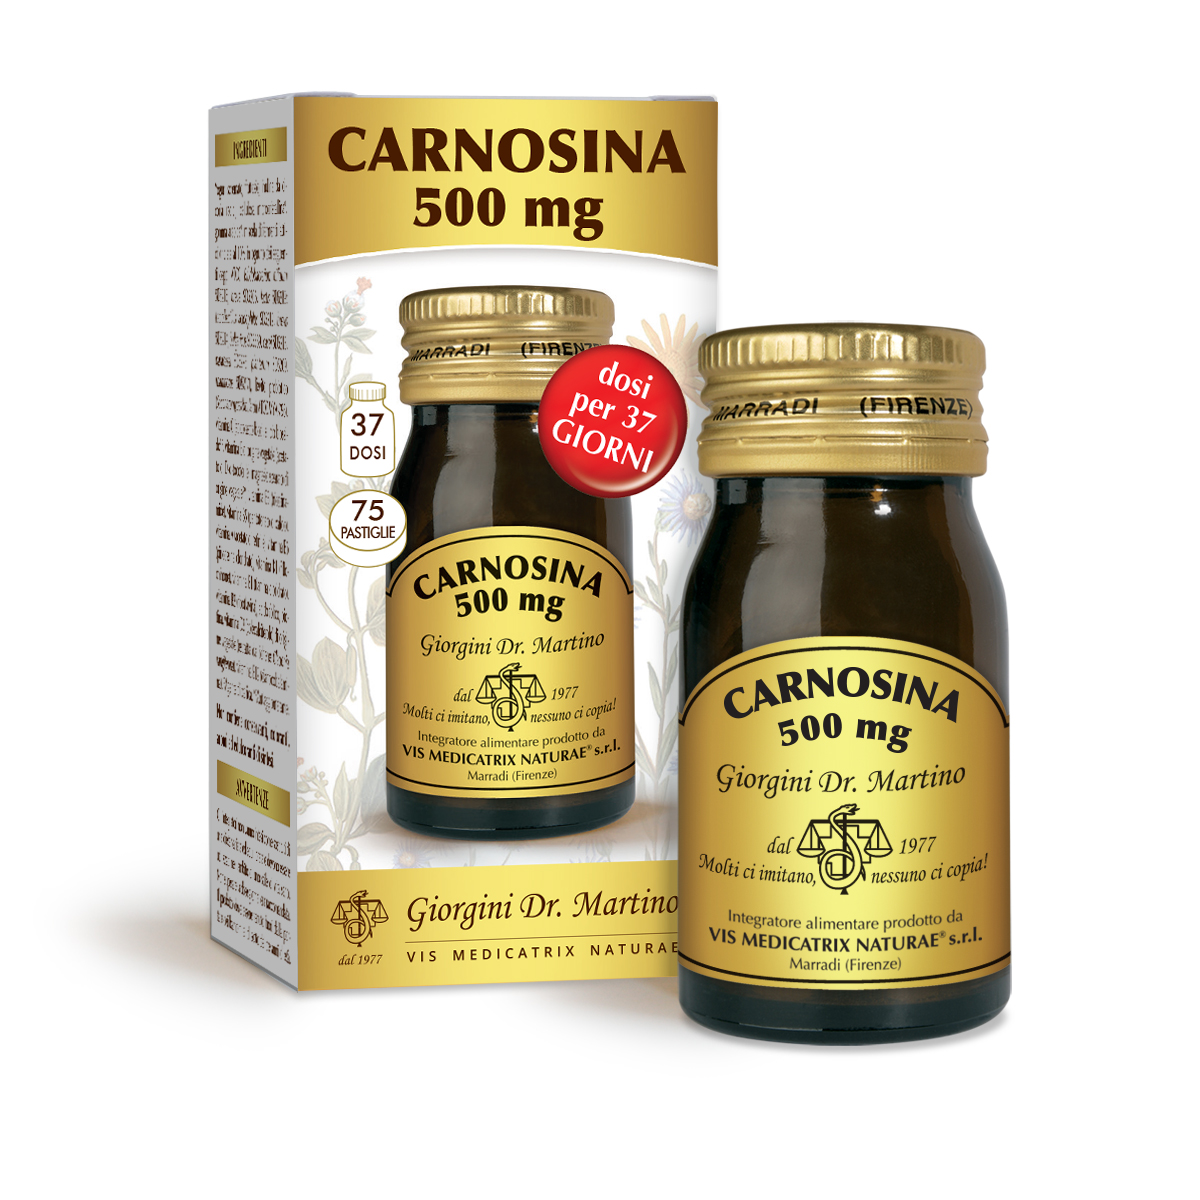 CARNOSINA 500 mg - 30 g - pastiglie da 400 mg